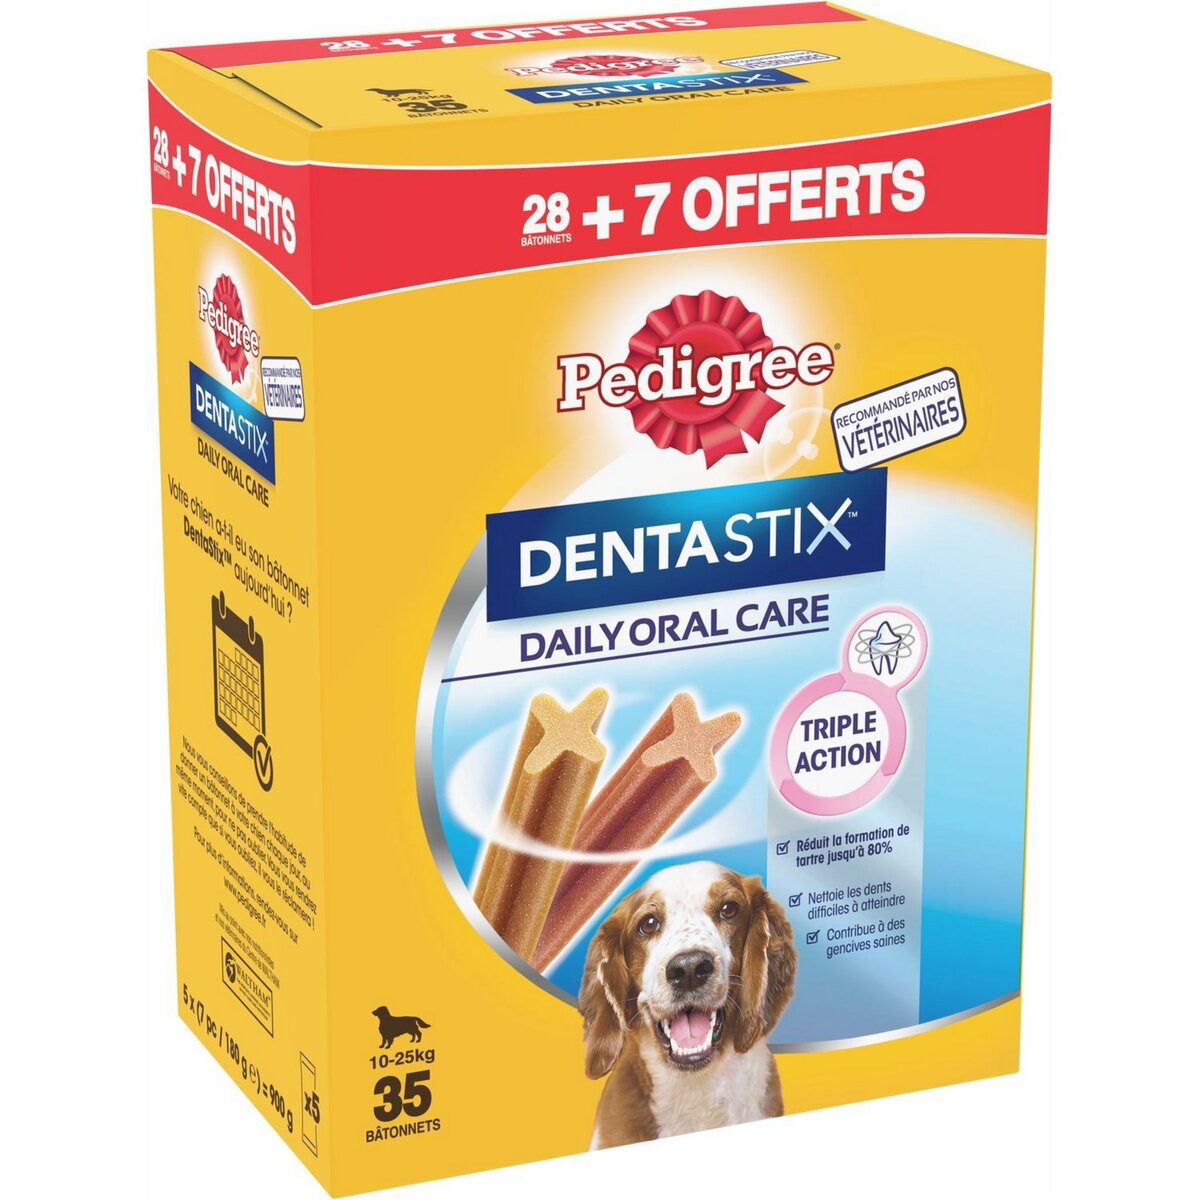 PEDIGREE Dentastix chien 10 à 25kg 28 +7 bâtonnets offerts 900g